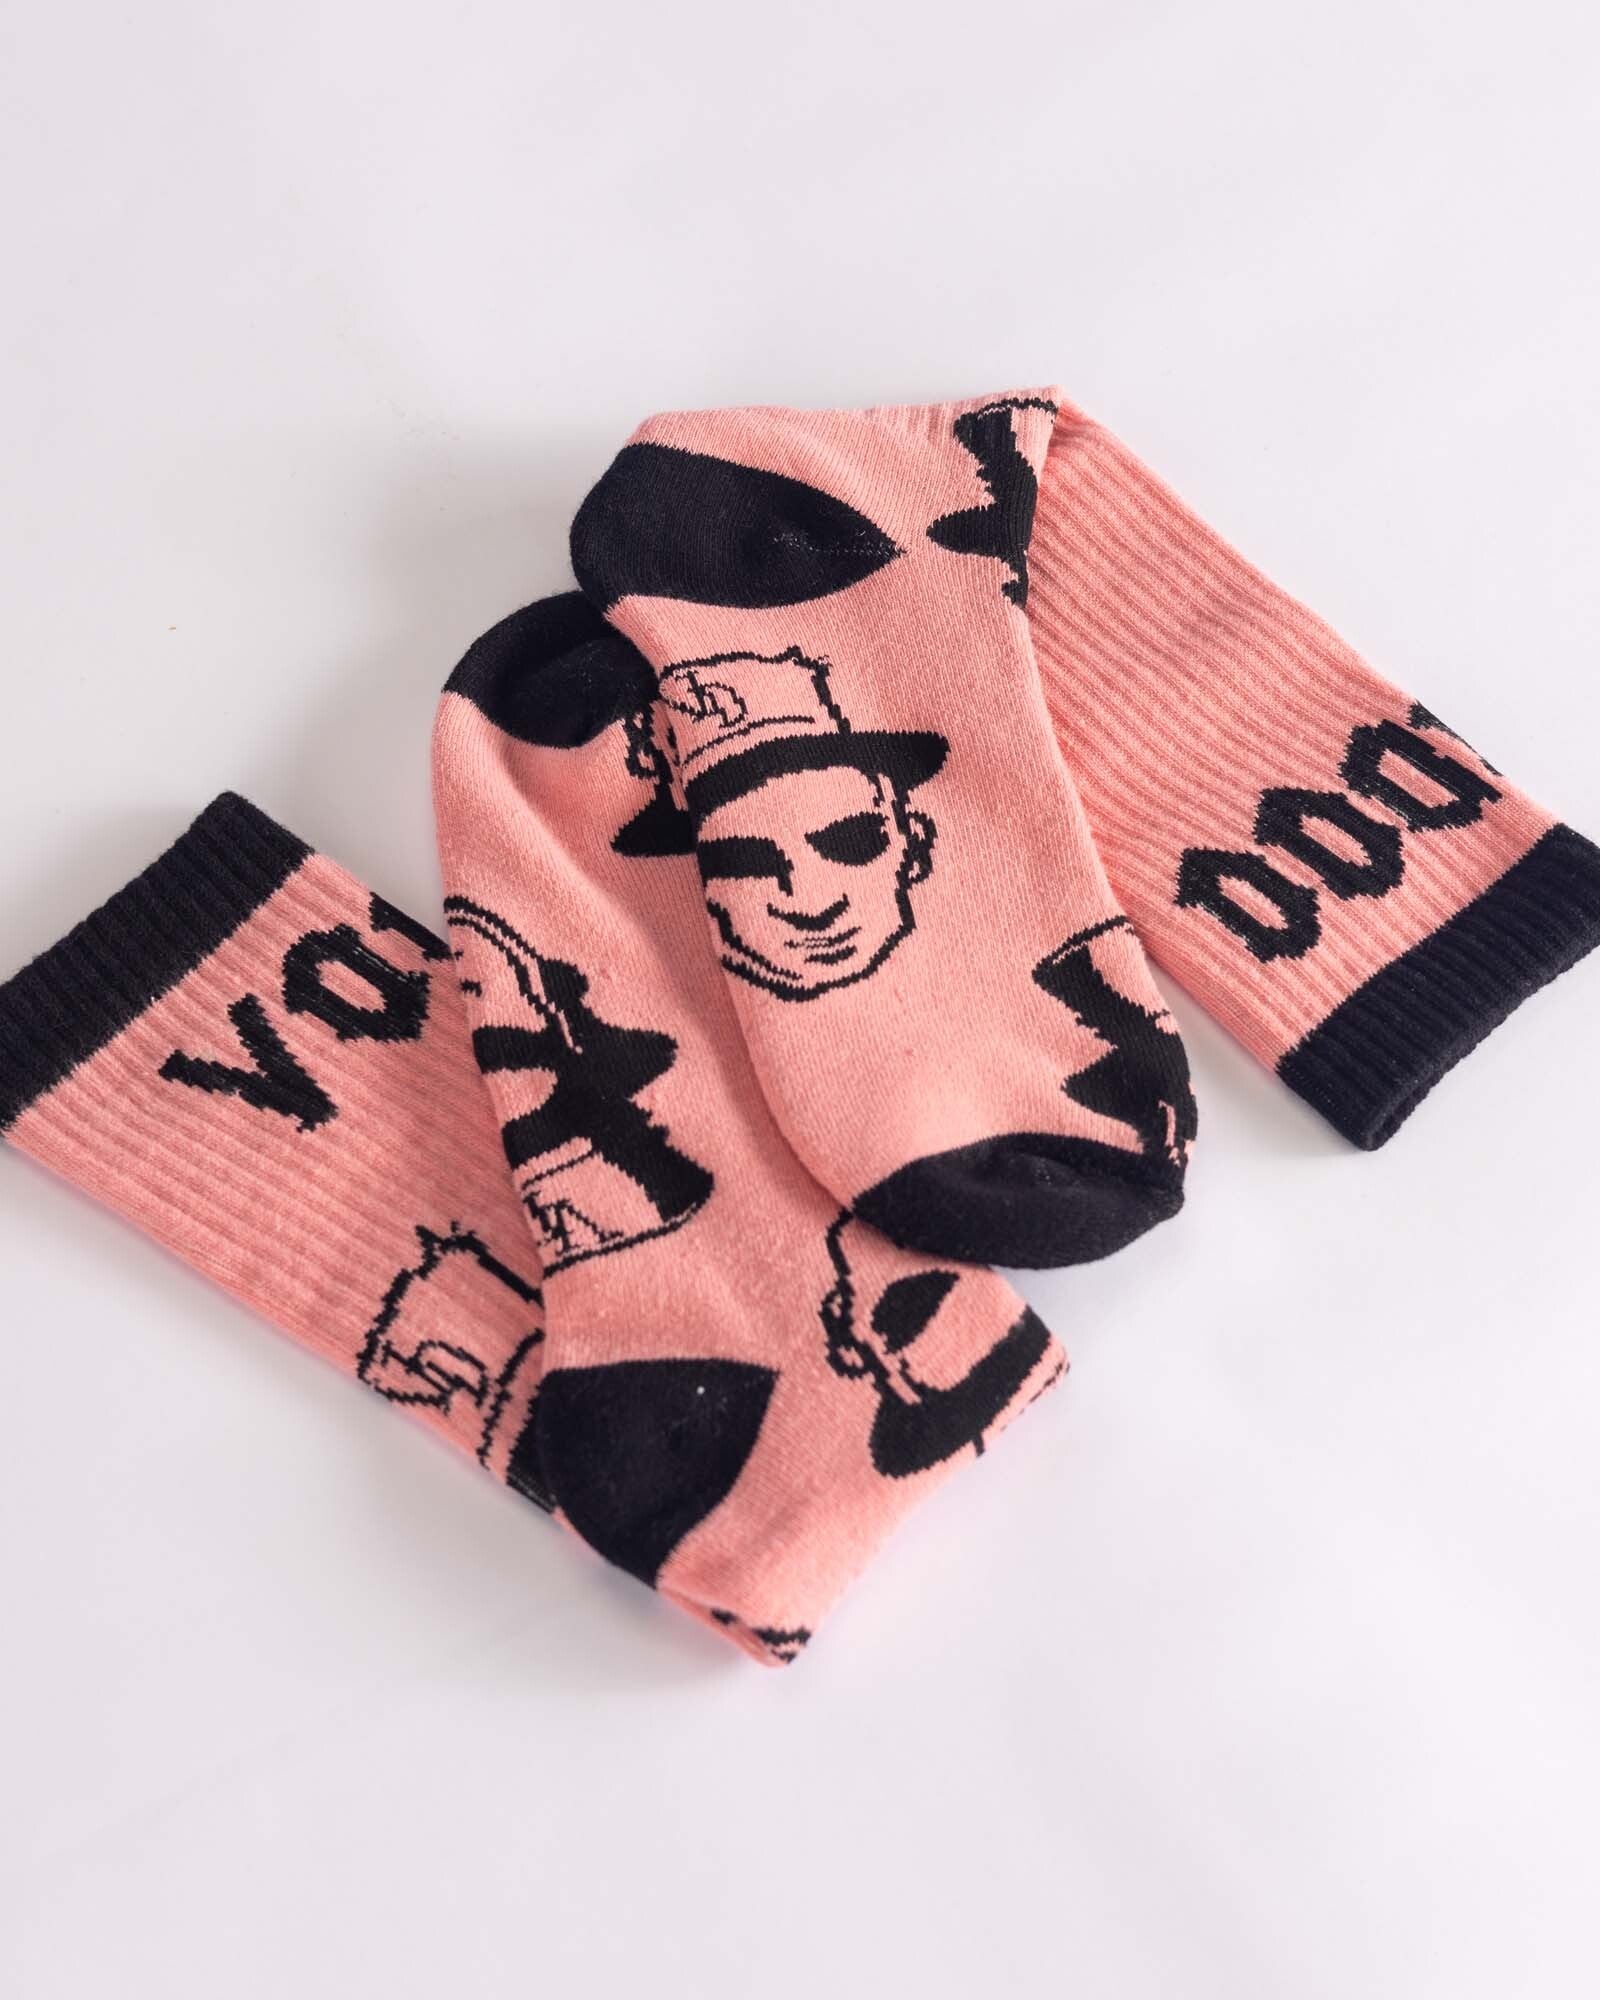 pink voodoo socks with black graphics